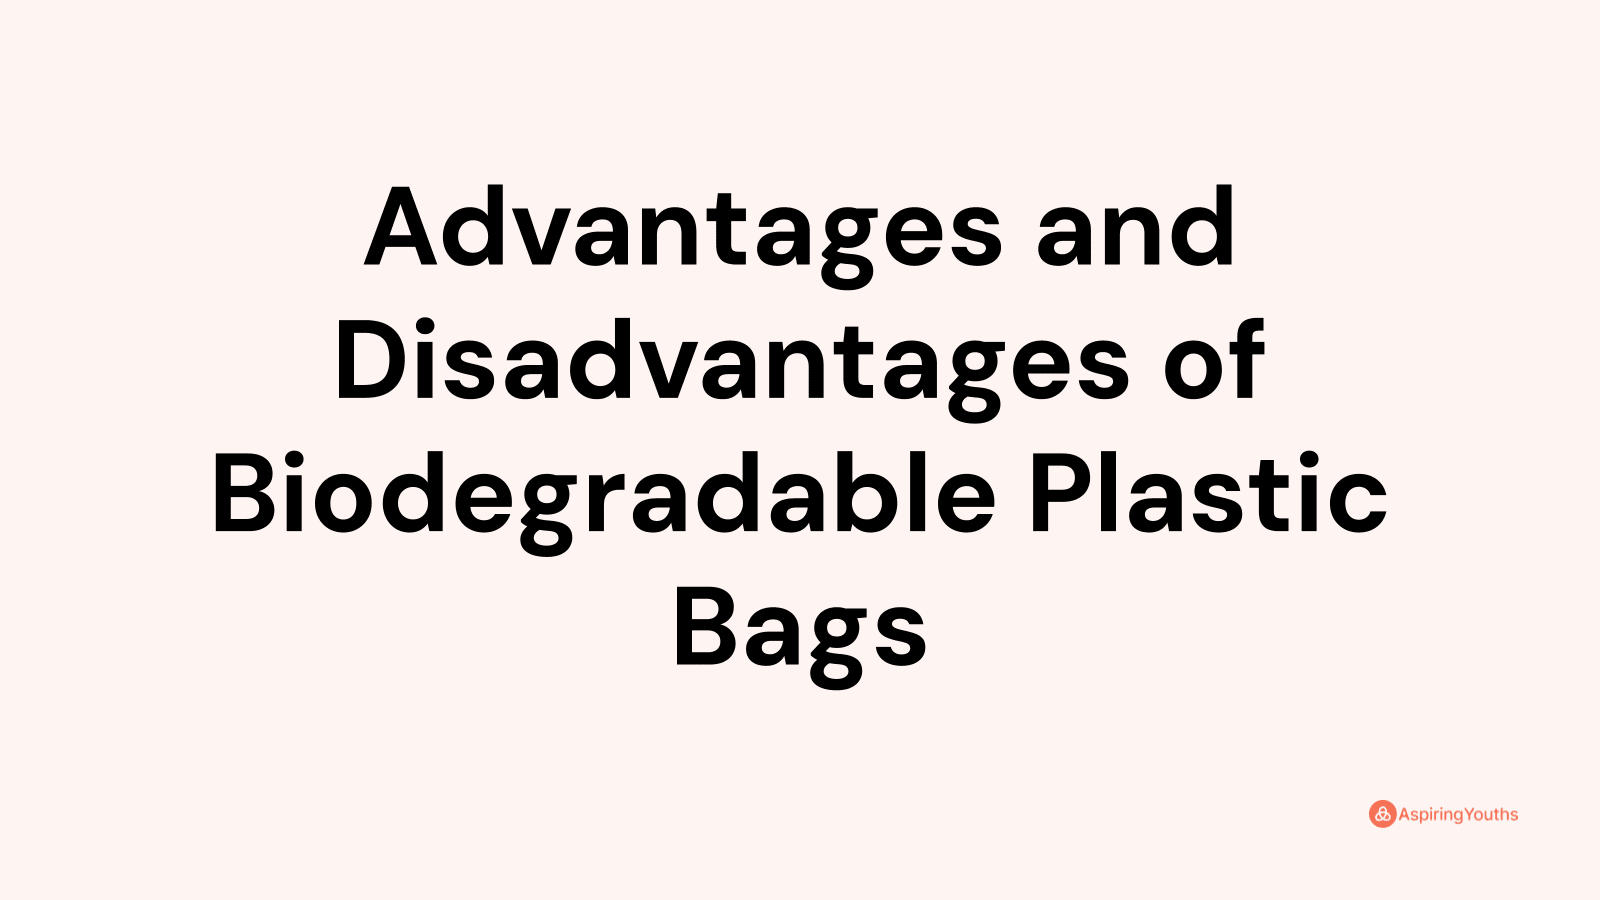 Advantages and disadvantages of Biodegradable Plastic Bags